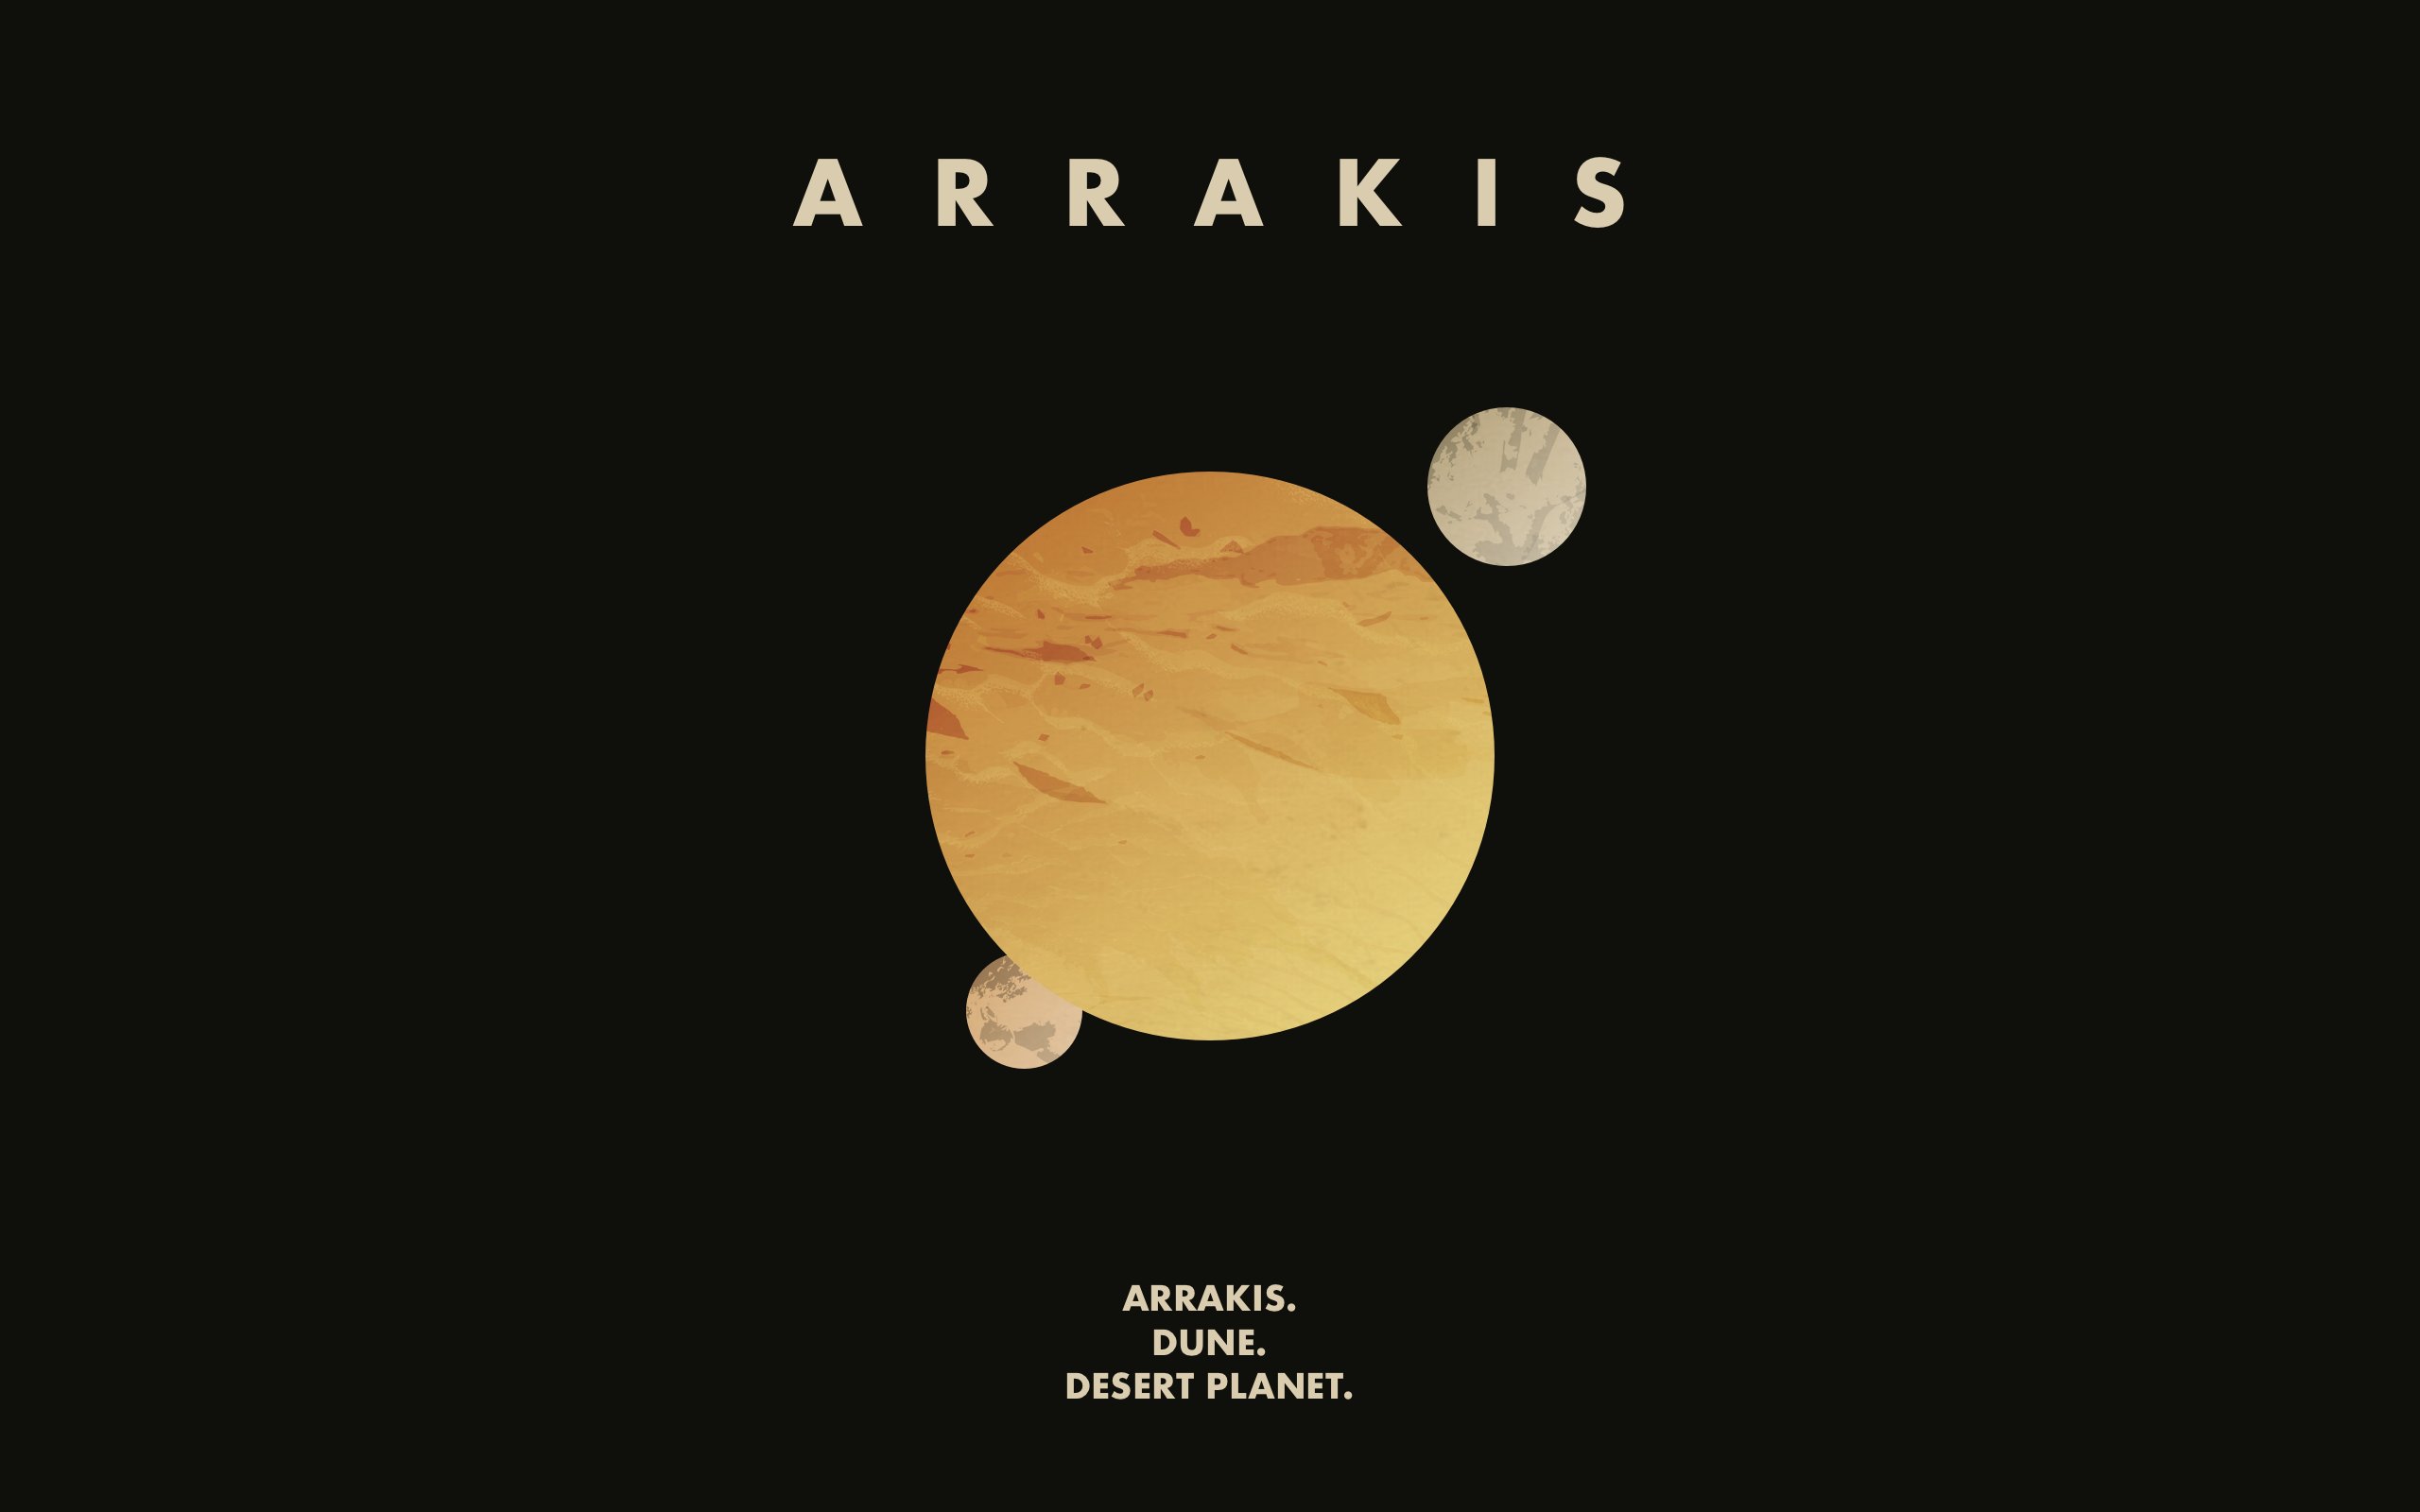 General 2560x1600 Dune (series) Arrakis planet Moon digital art text simple background